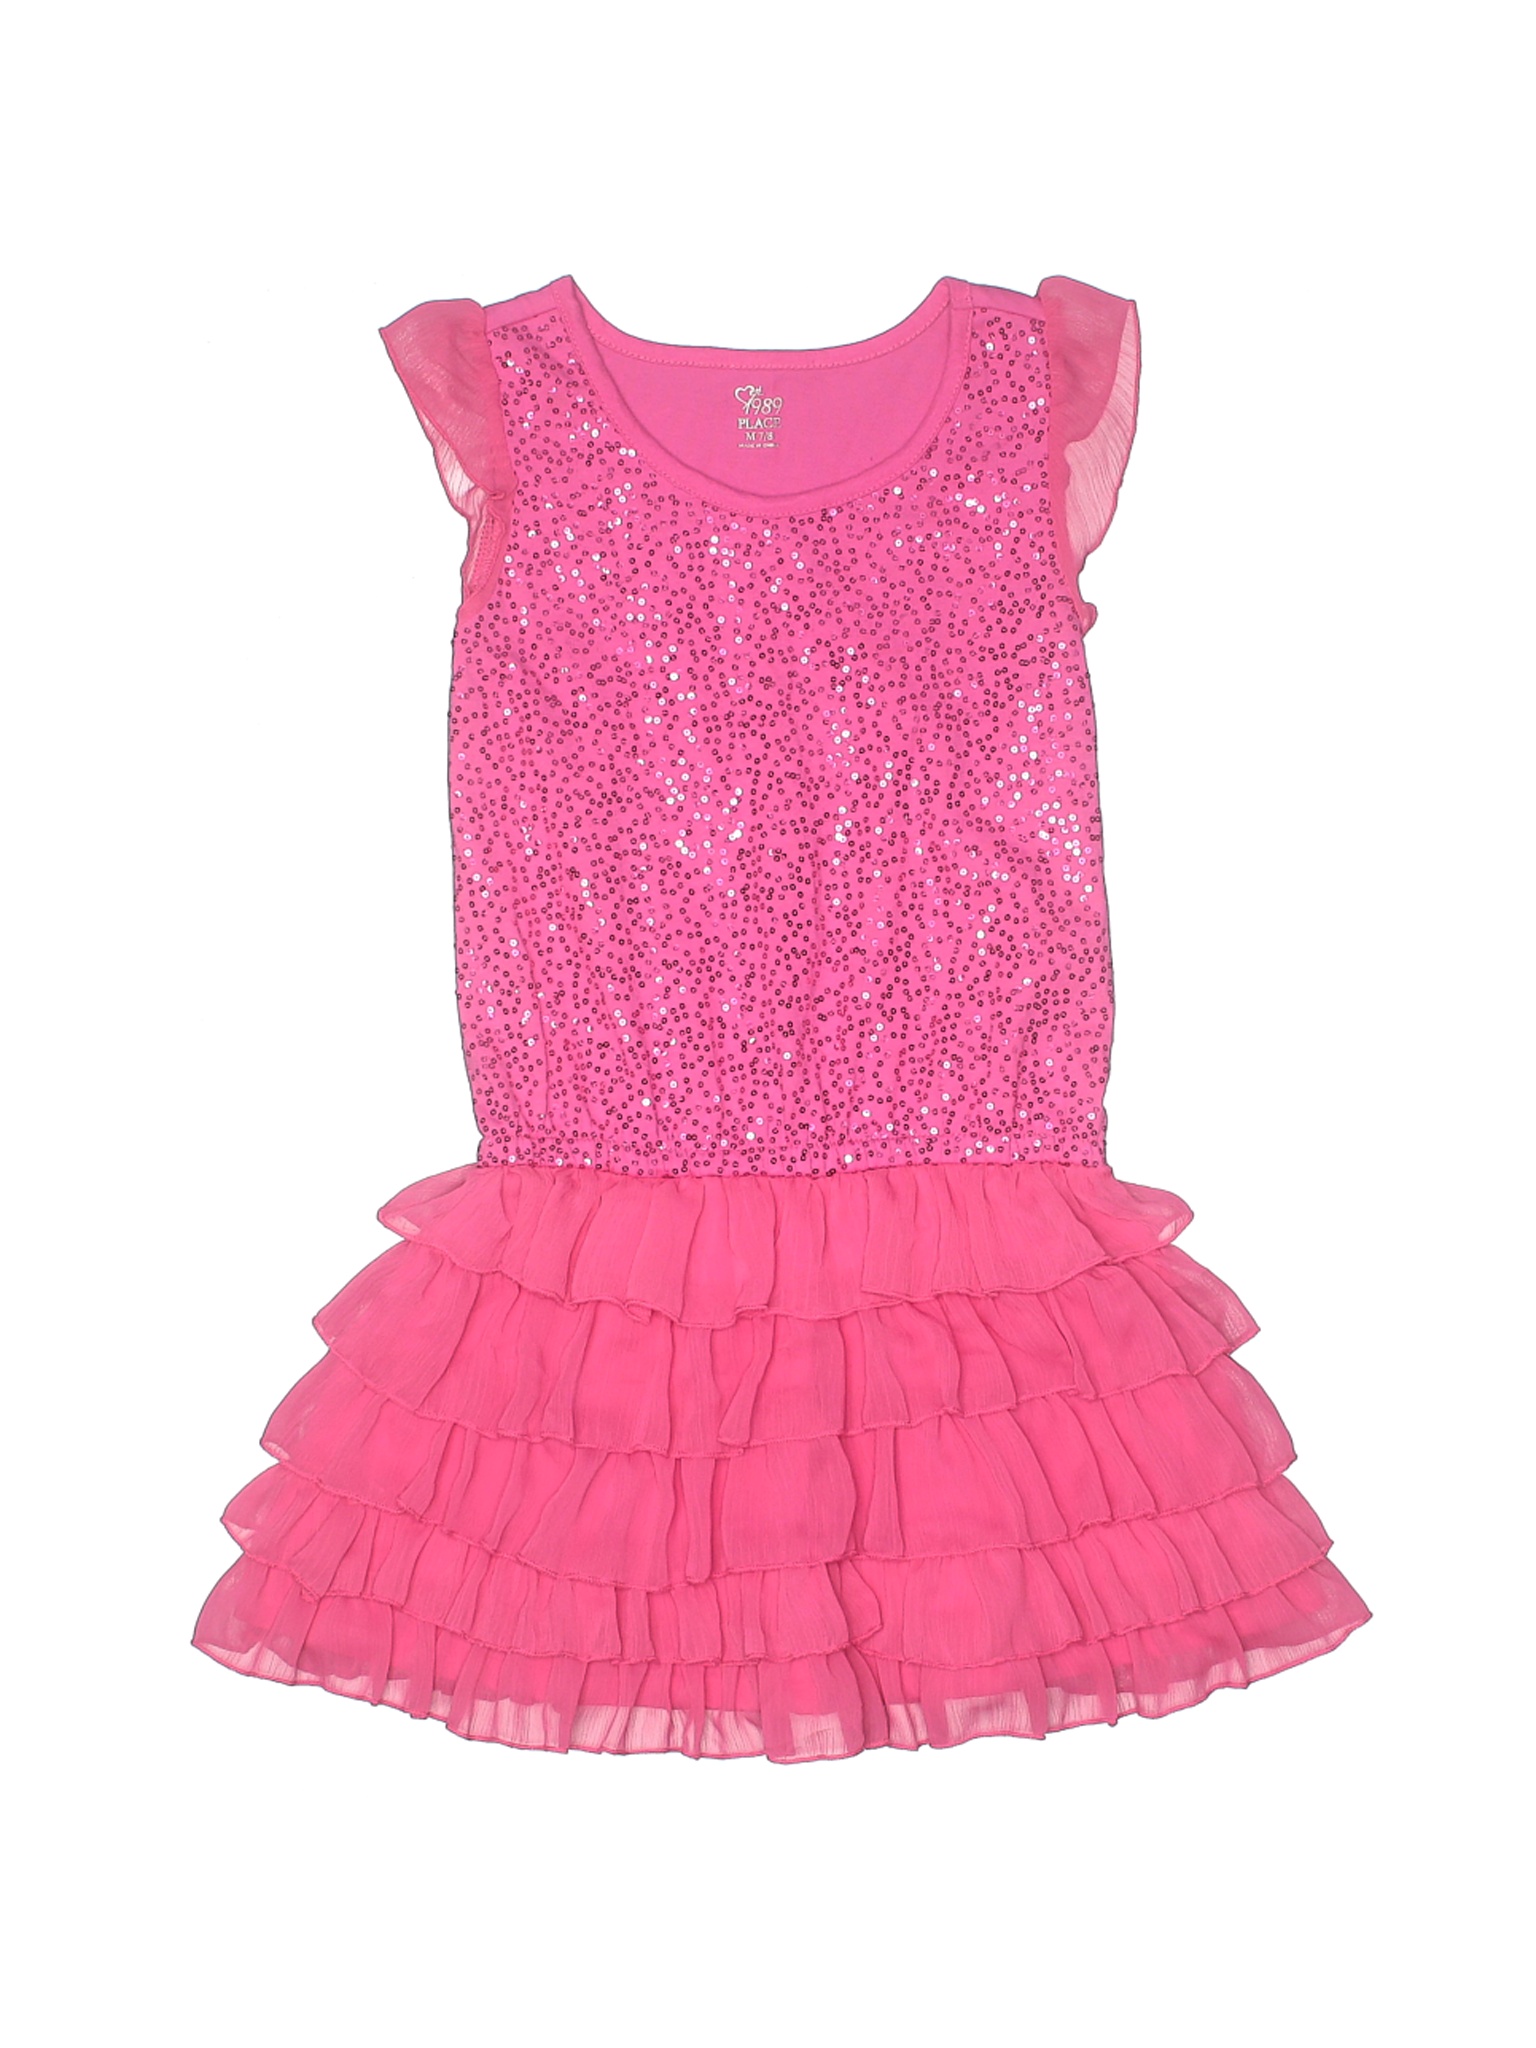 The Children's Place Girls Pink Dress 7 | eBay